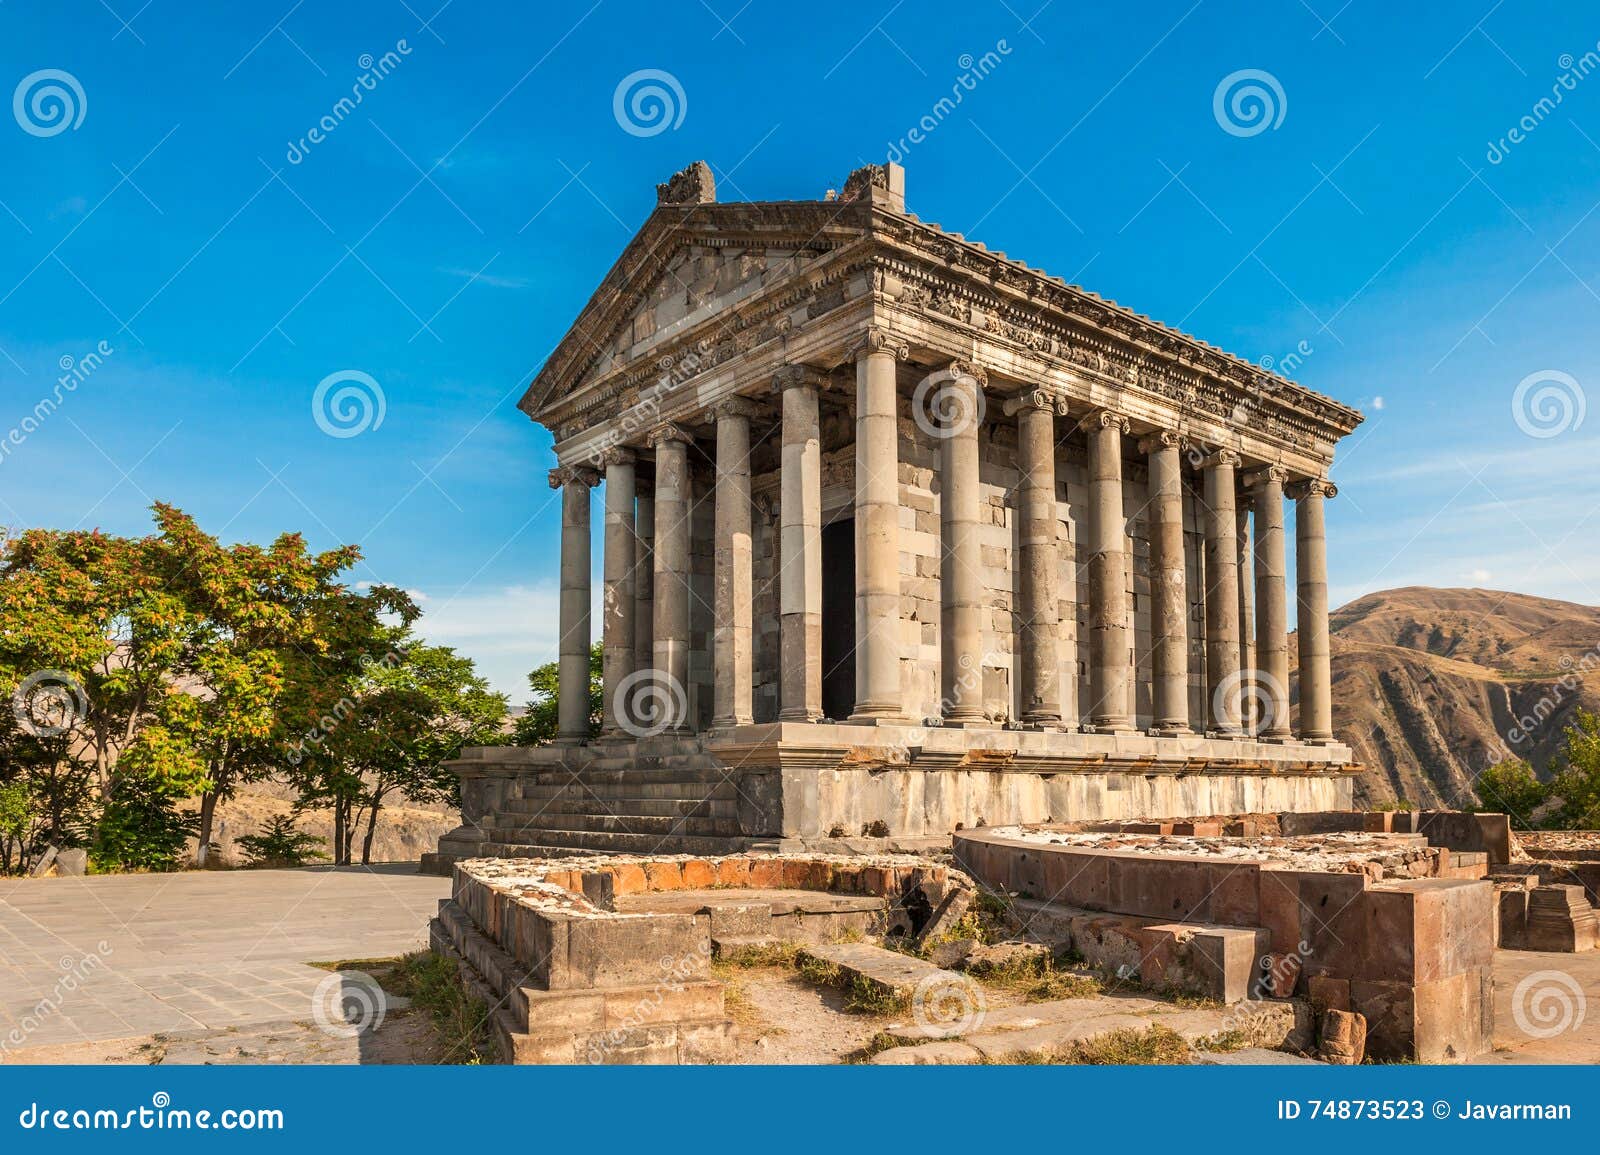 the hellenic temple of garni in armenia